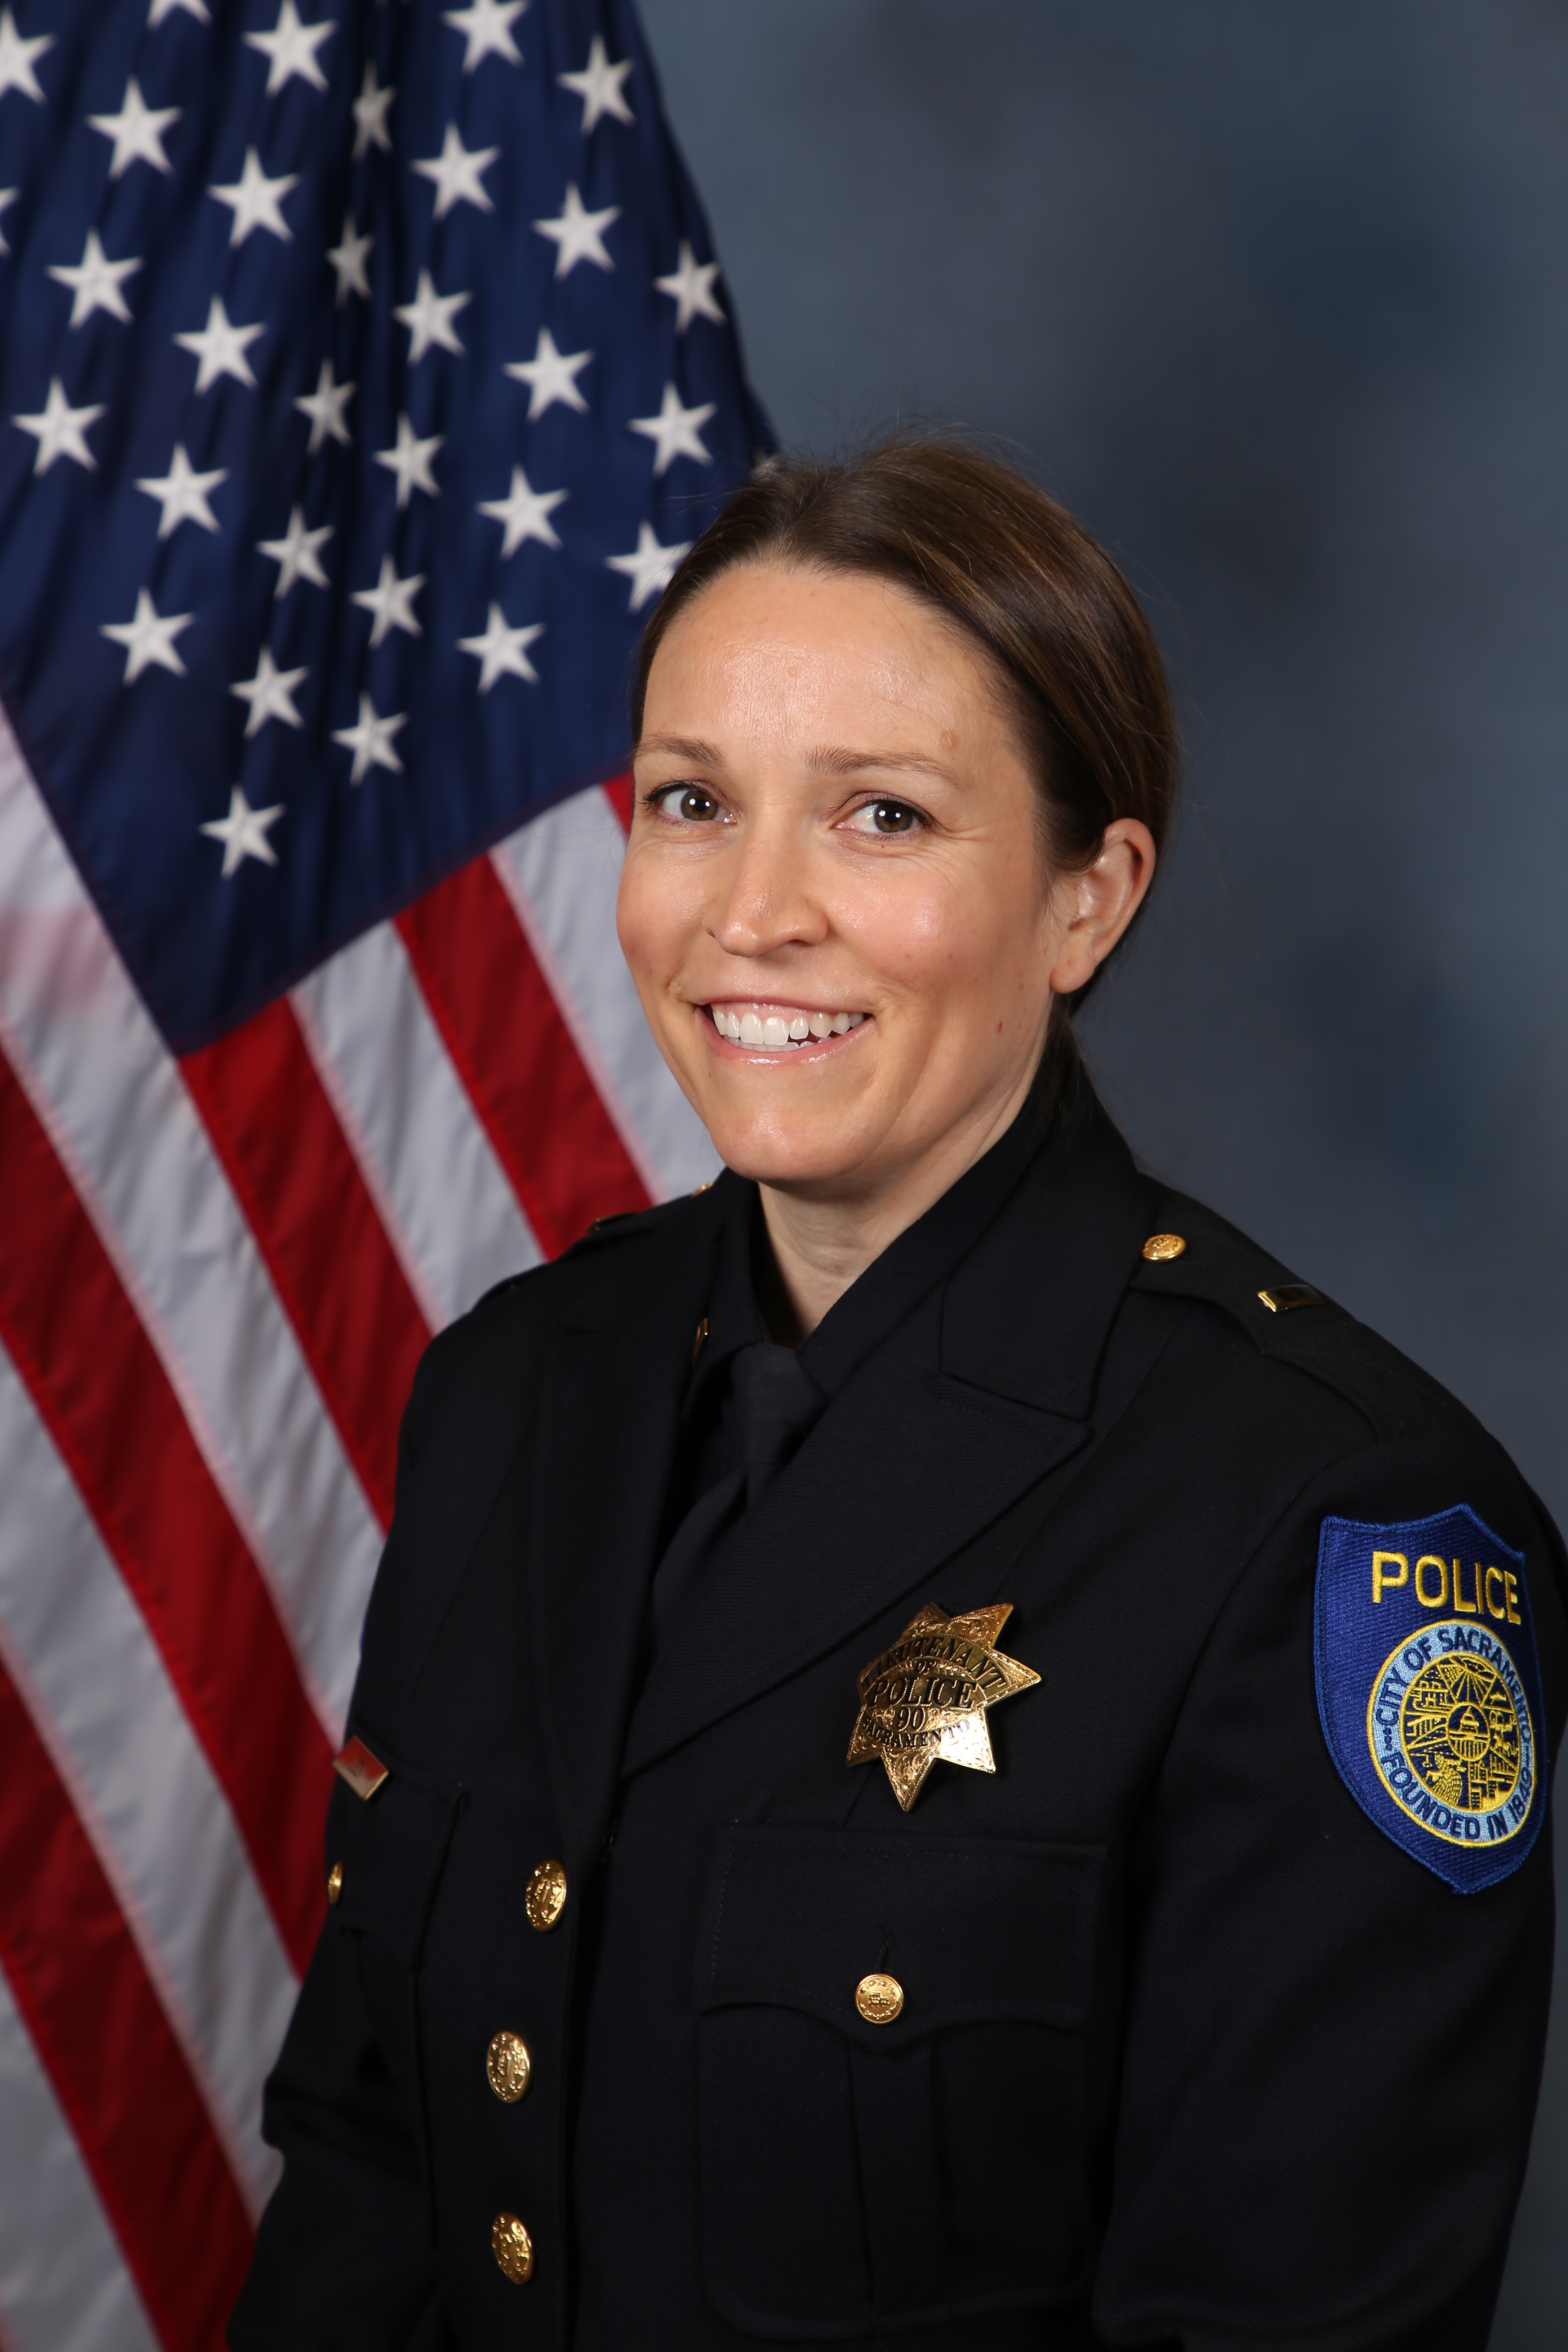 A portrait photo of the Sacramento Police Department Lieutenant Jennifer Ligon, in full class-A uniform